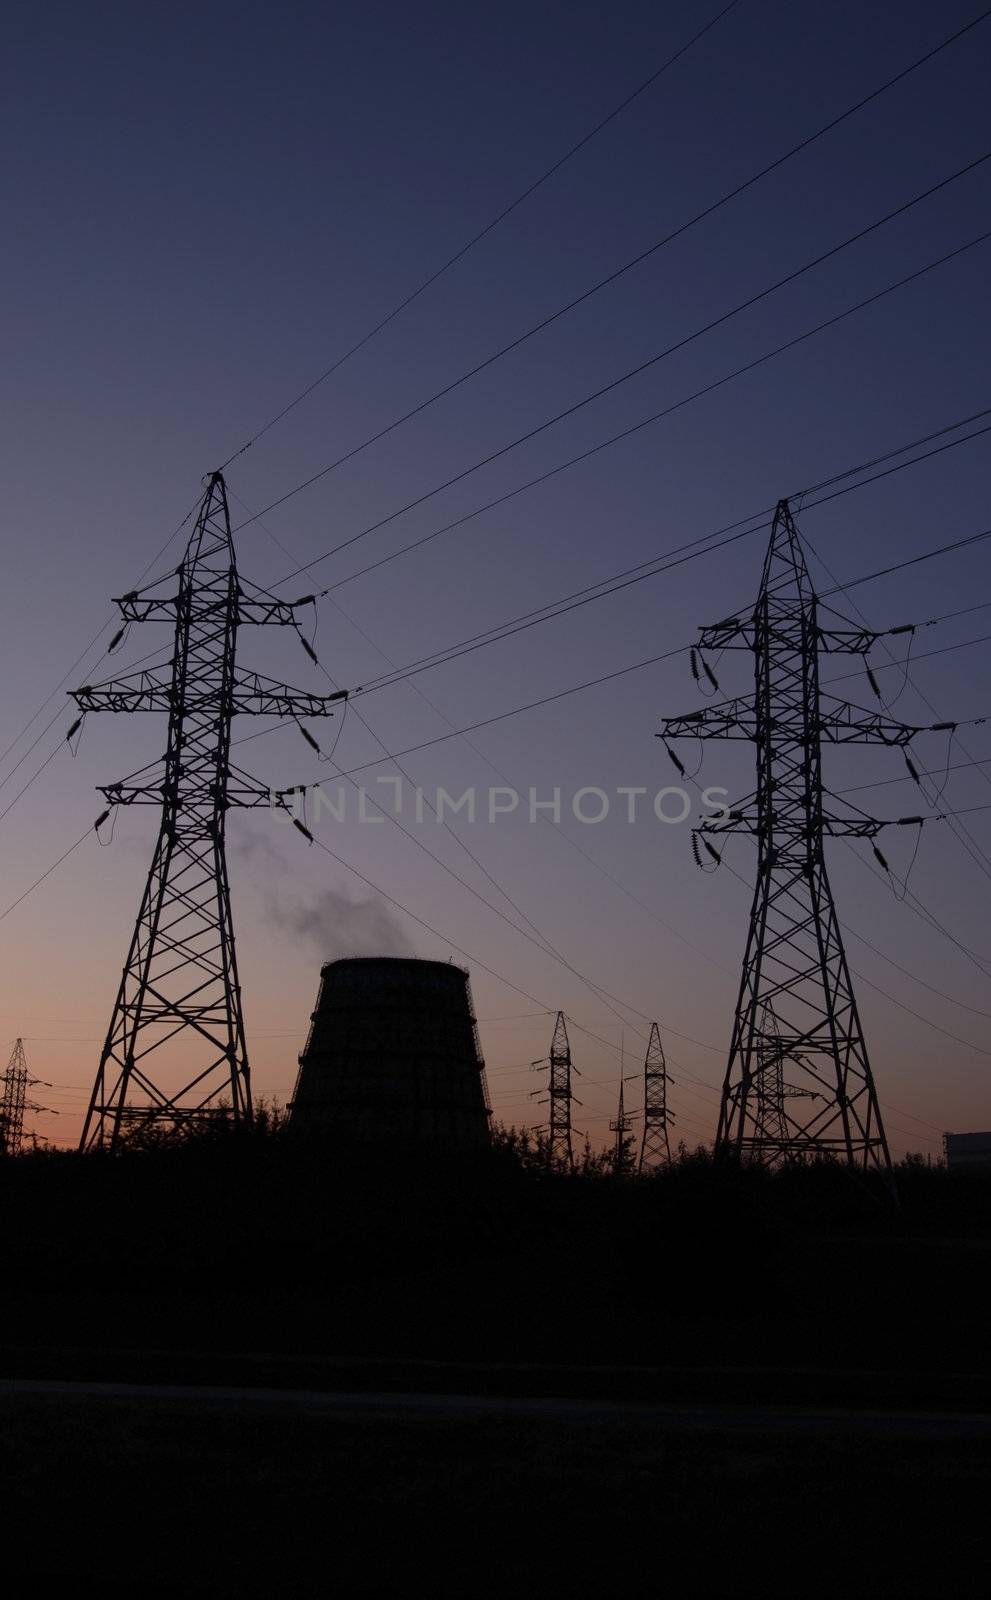 Power station over orange and blue sky